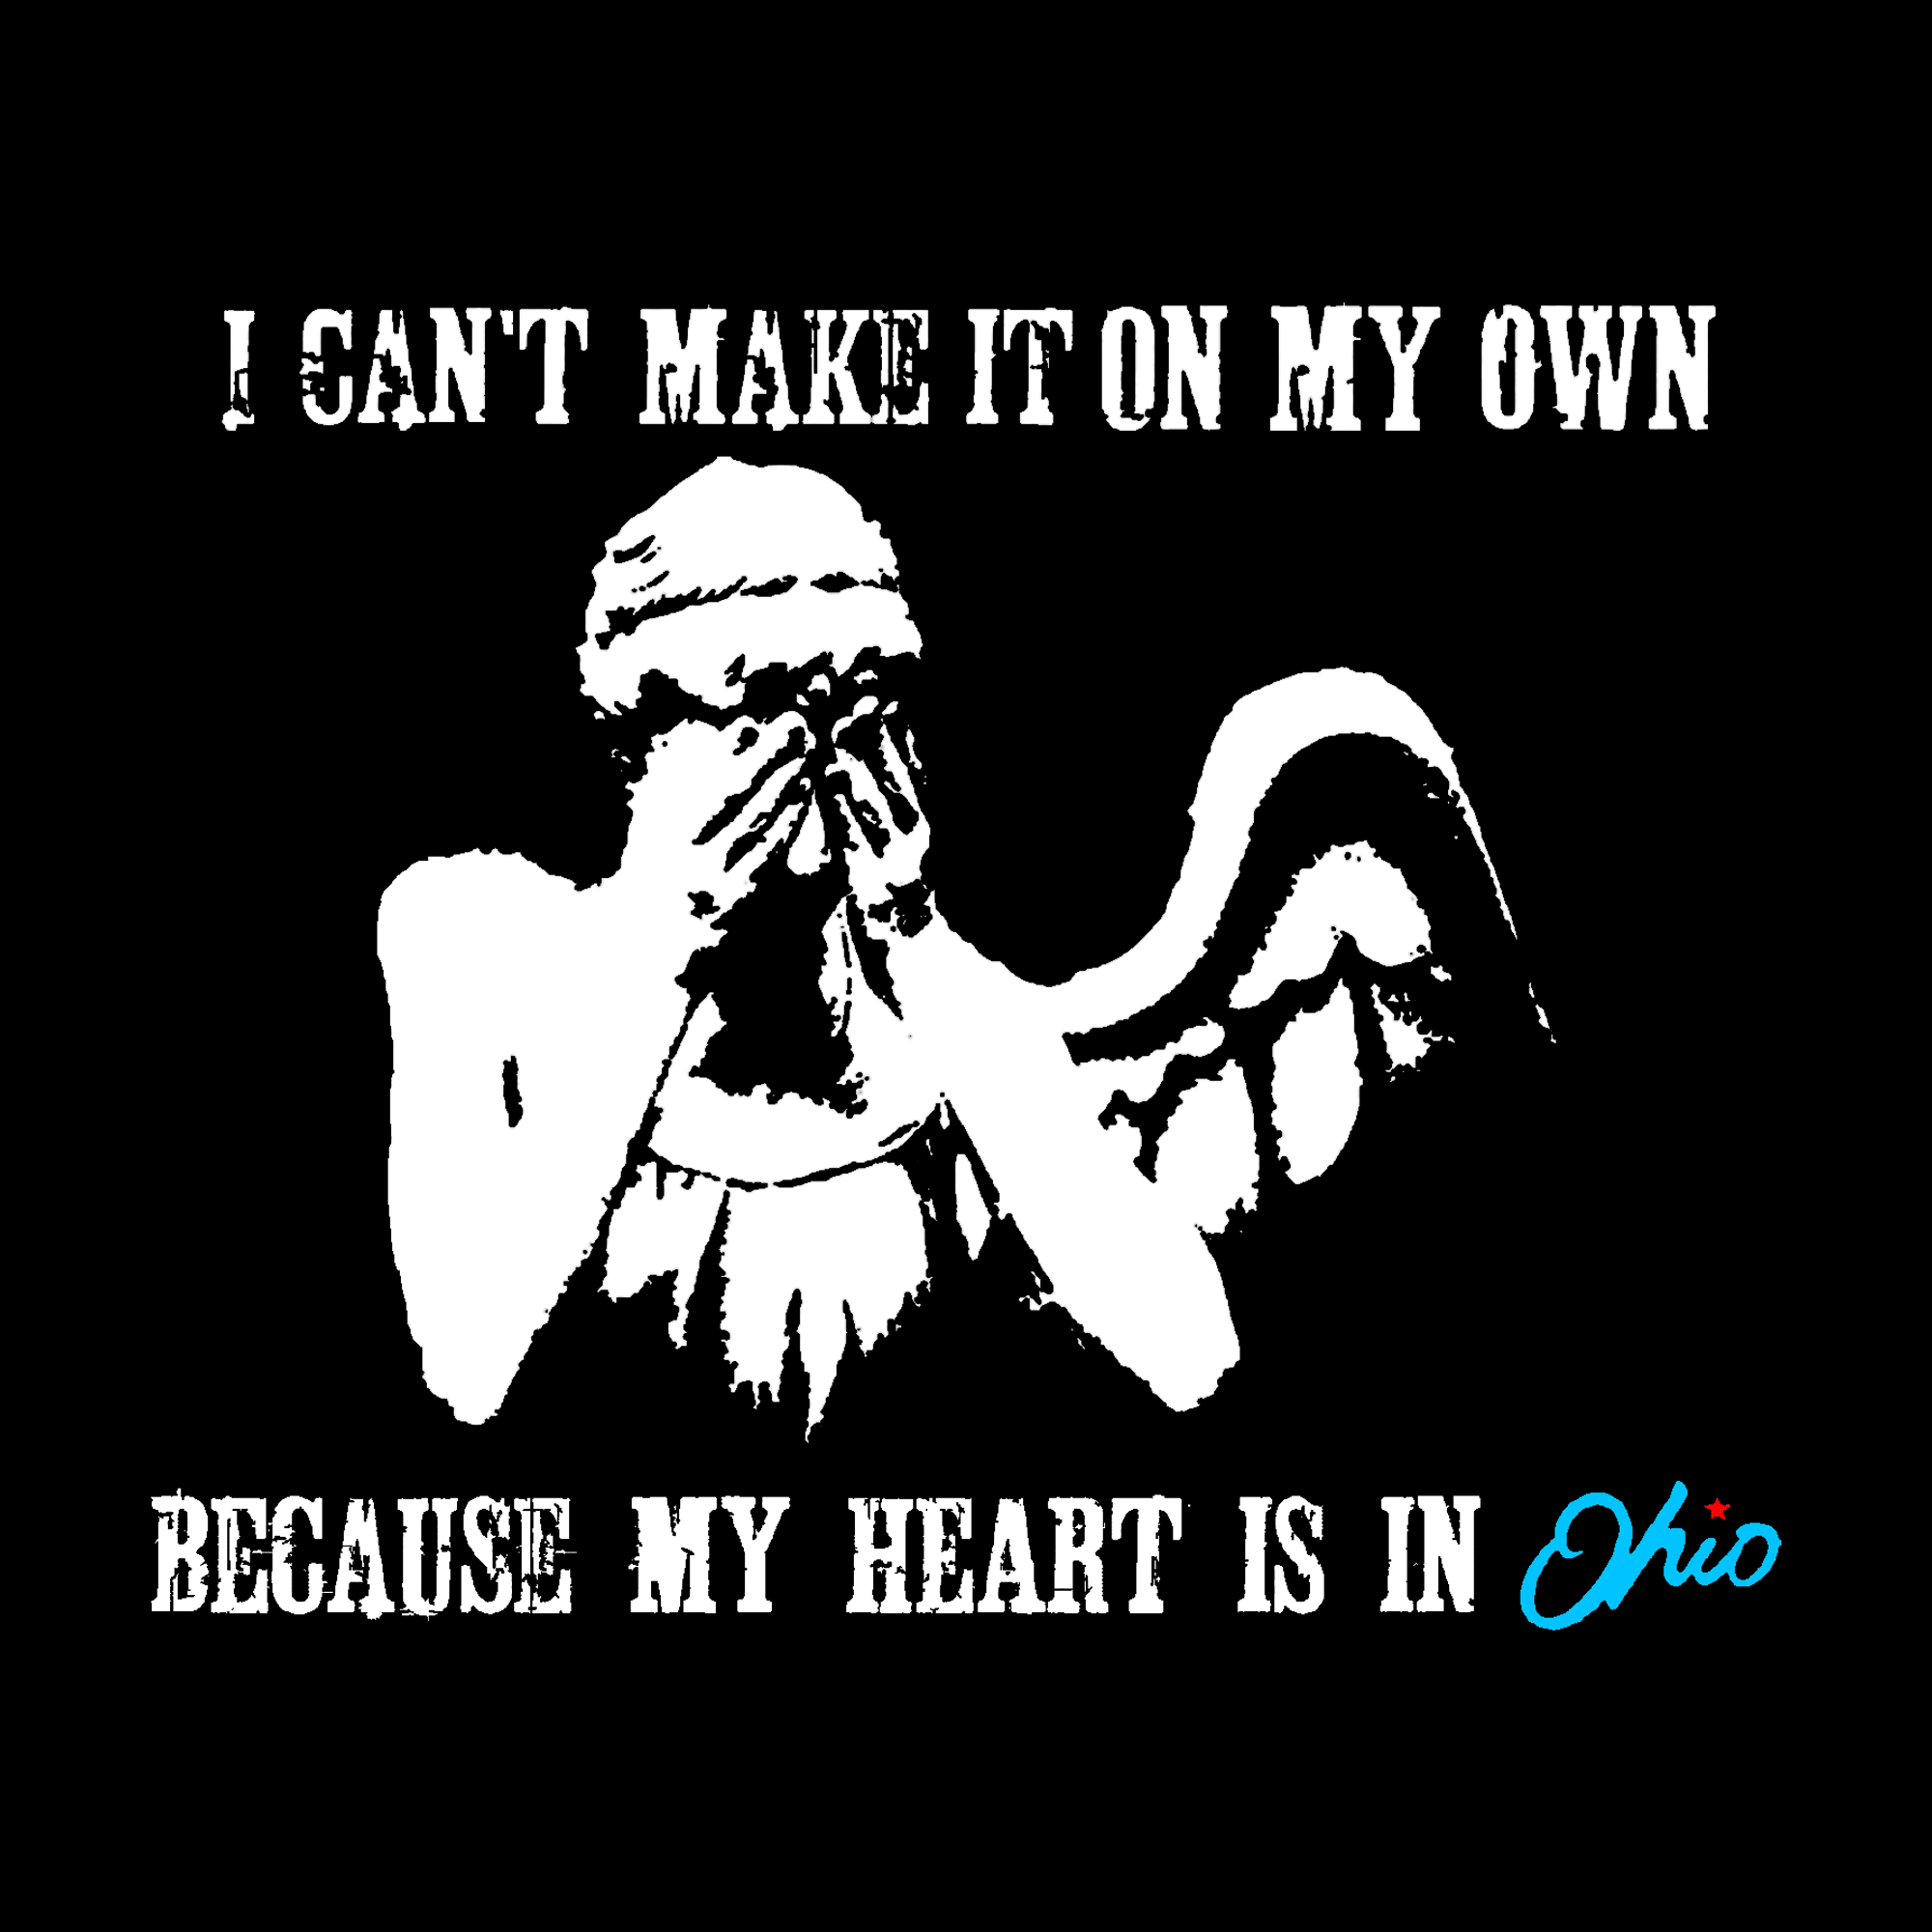 My Heart is in Ohio emo tee